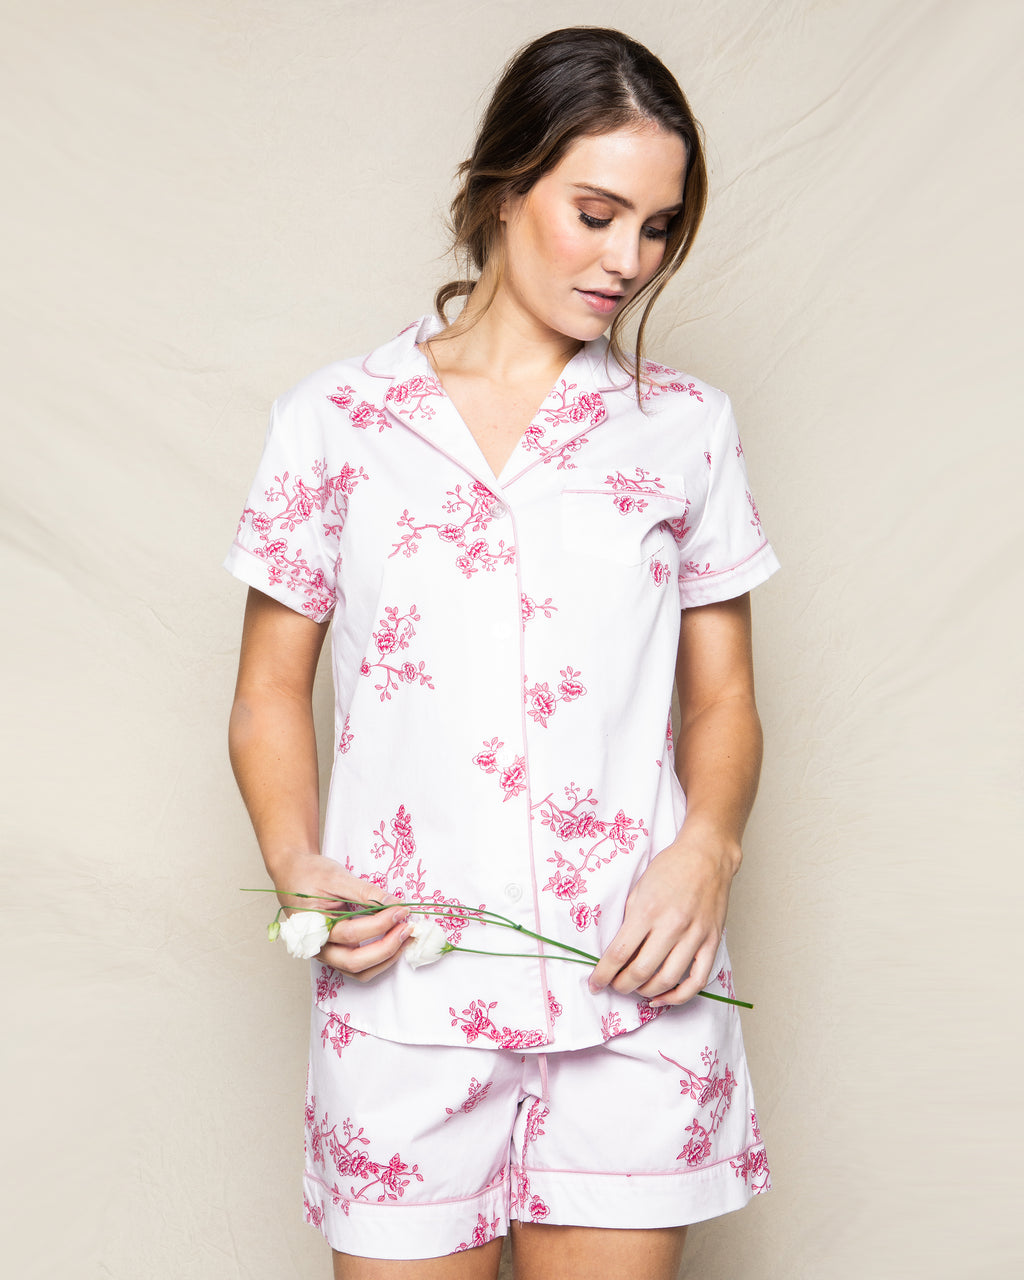 Ella Simone English Rose Pajama Set